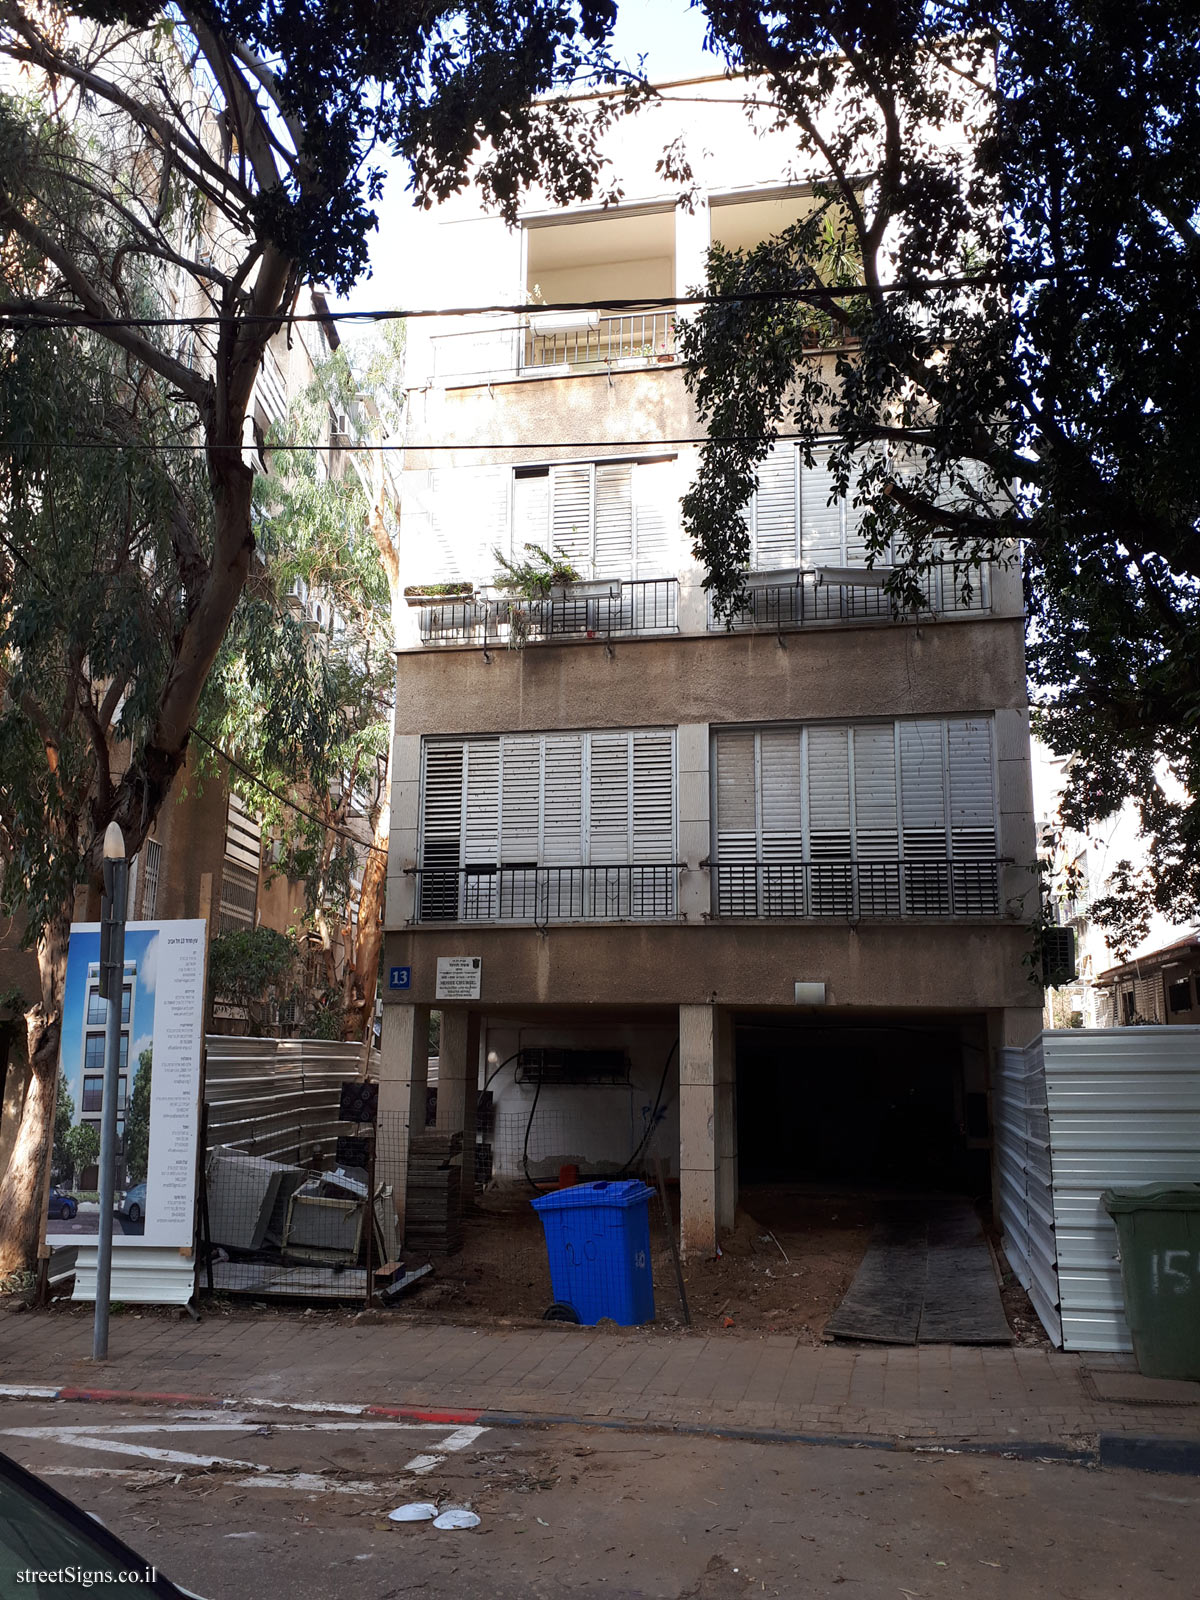 The house of Moshe Churgel - Ein Harod St 13, Tel Aviv-Yafo